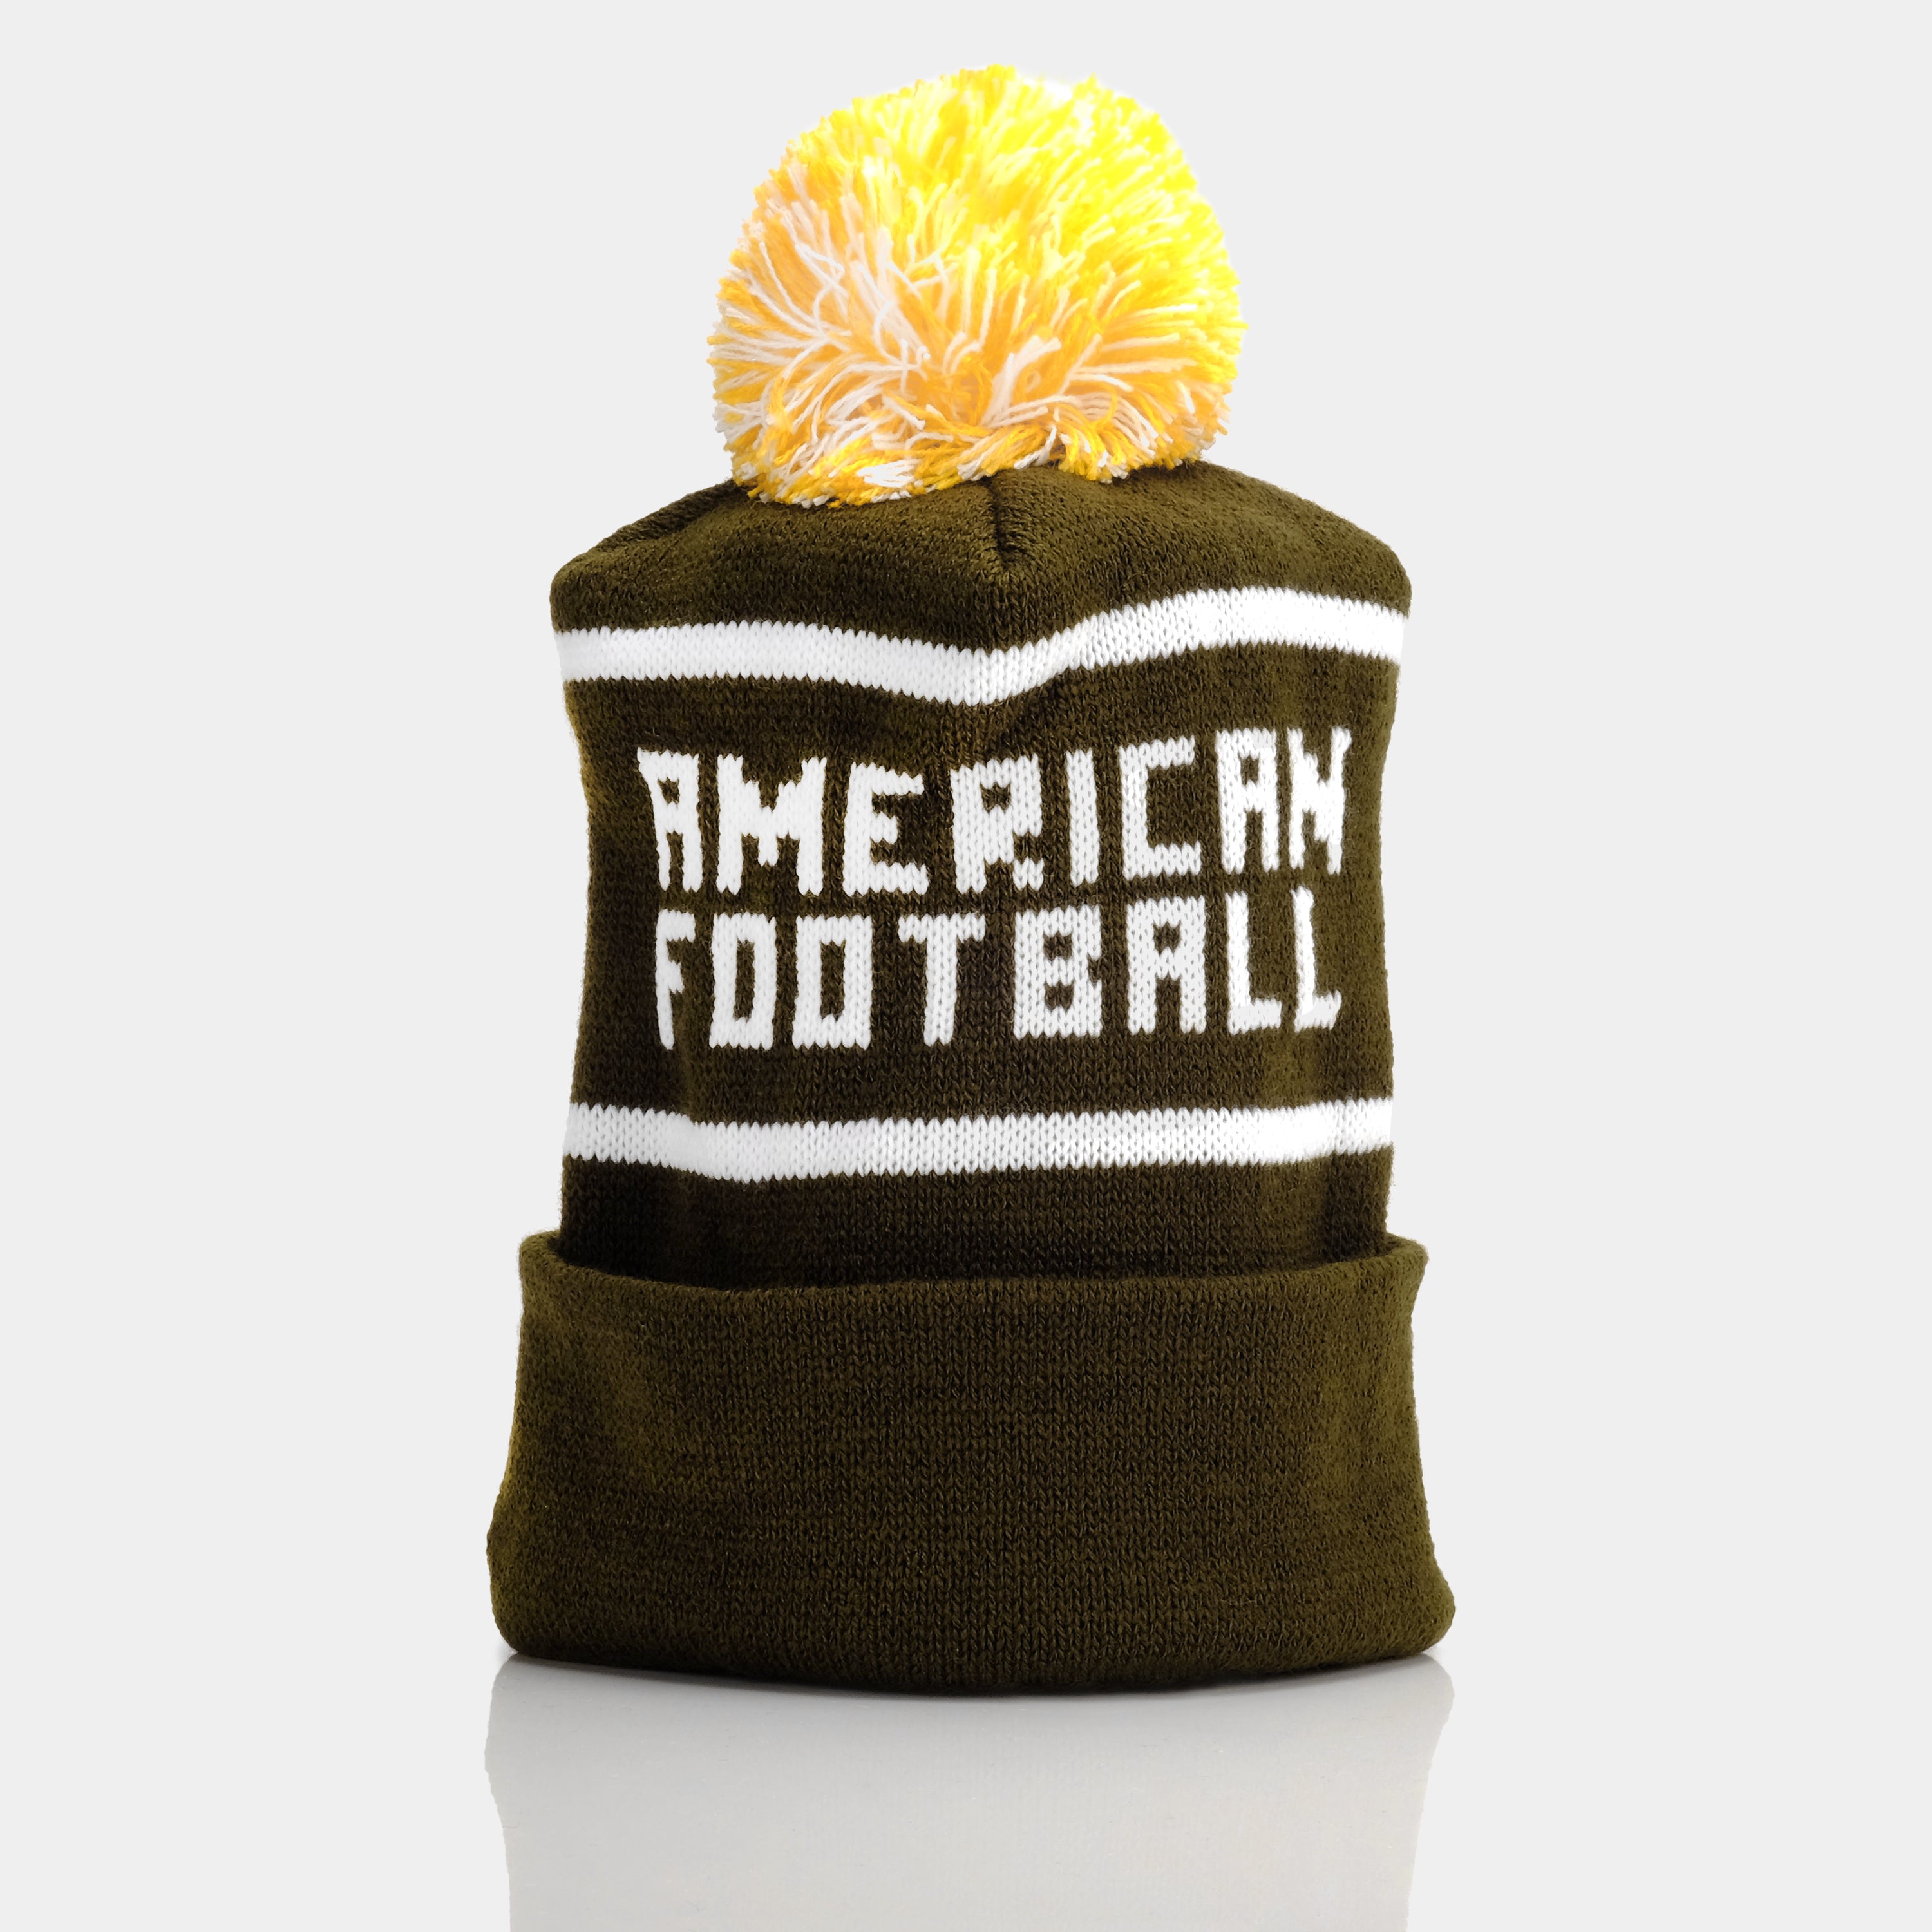 American Football Knit Hat